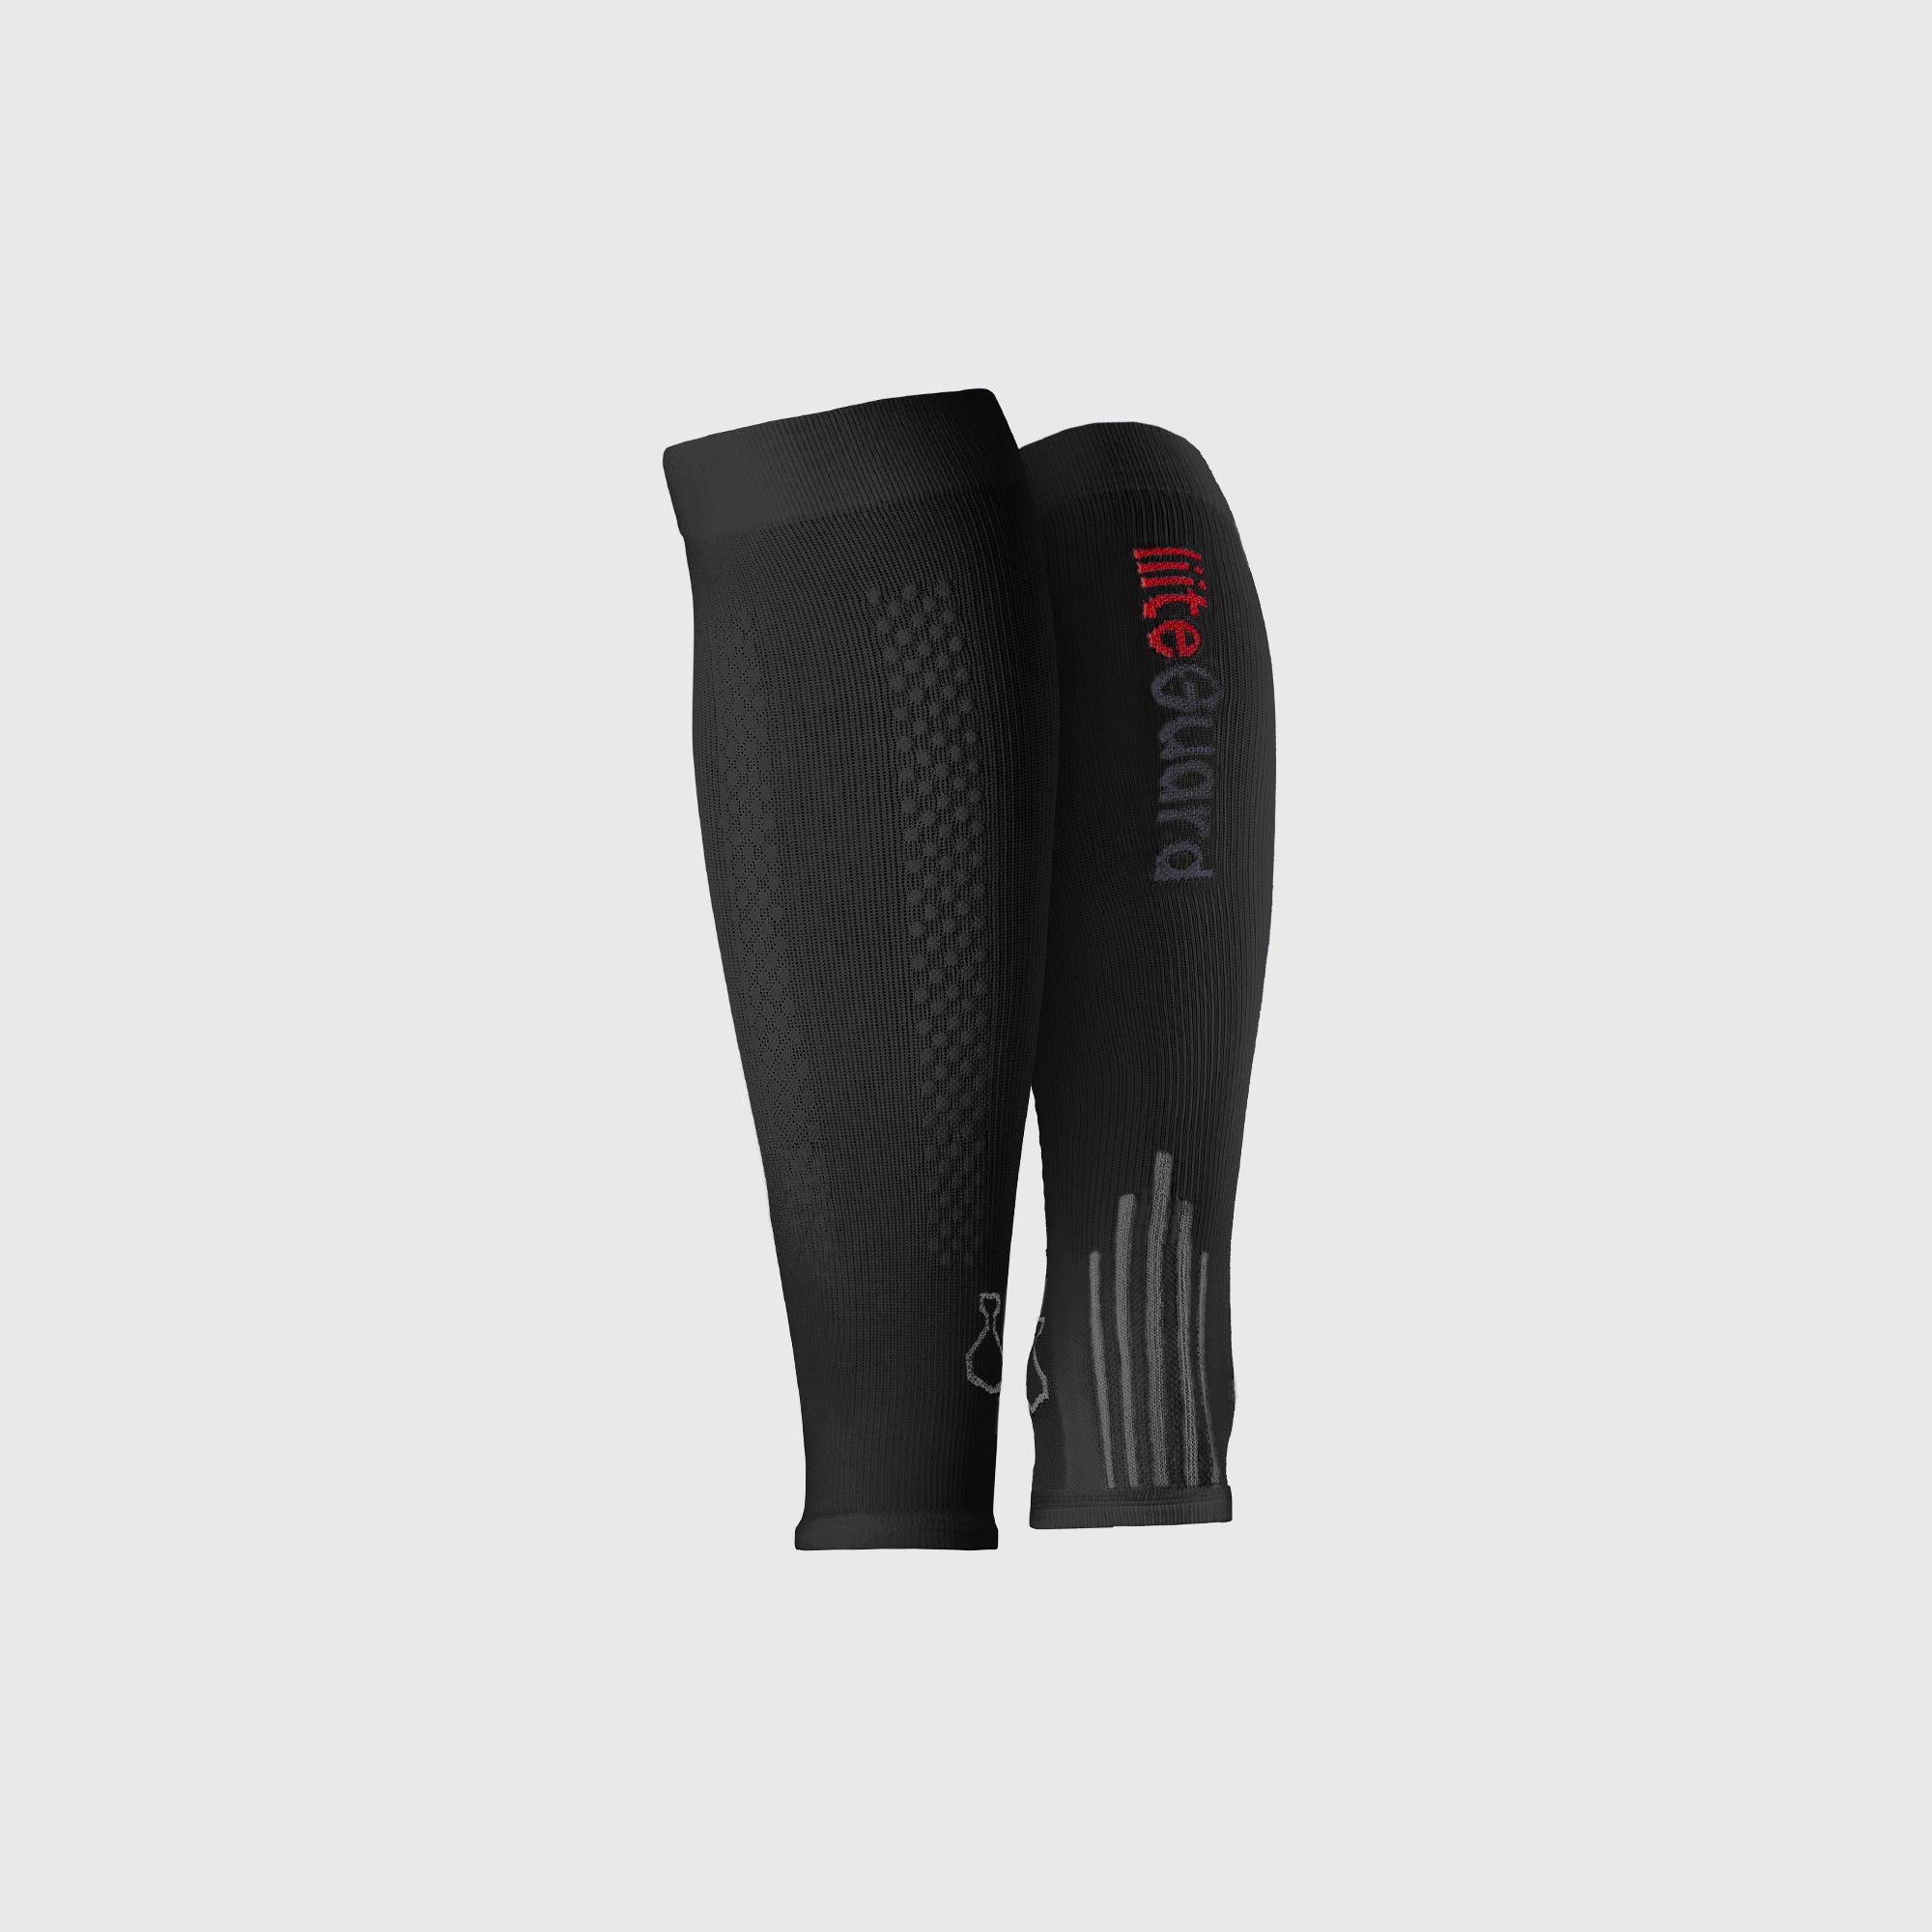 Liiteguard SHIN-TECH COMPRESSION CALF SLEEVE Leg sleeve BLACK